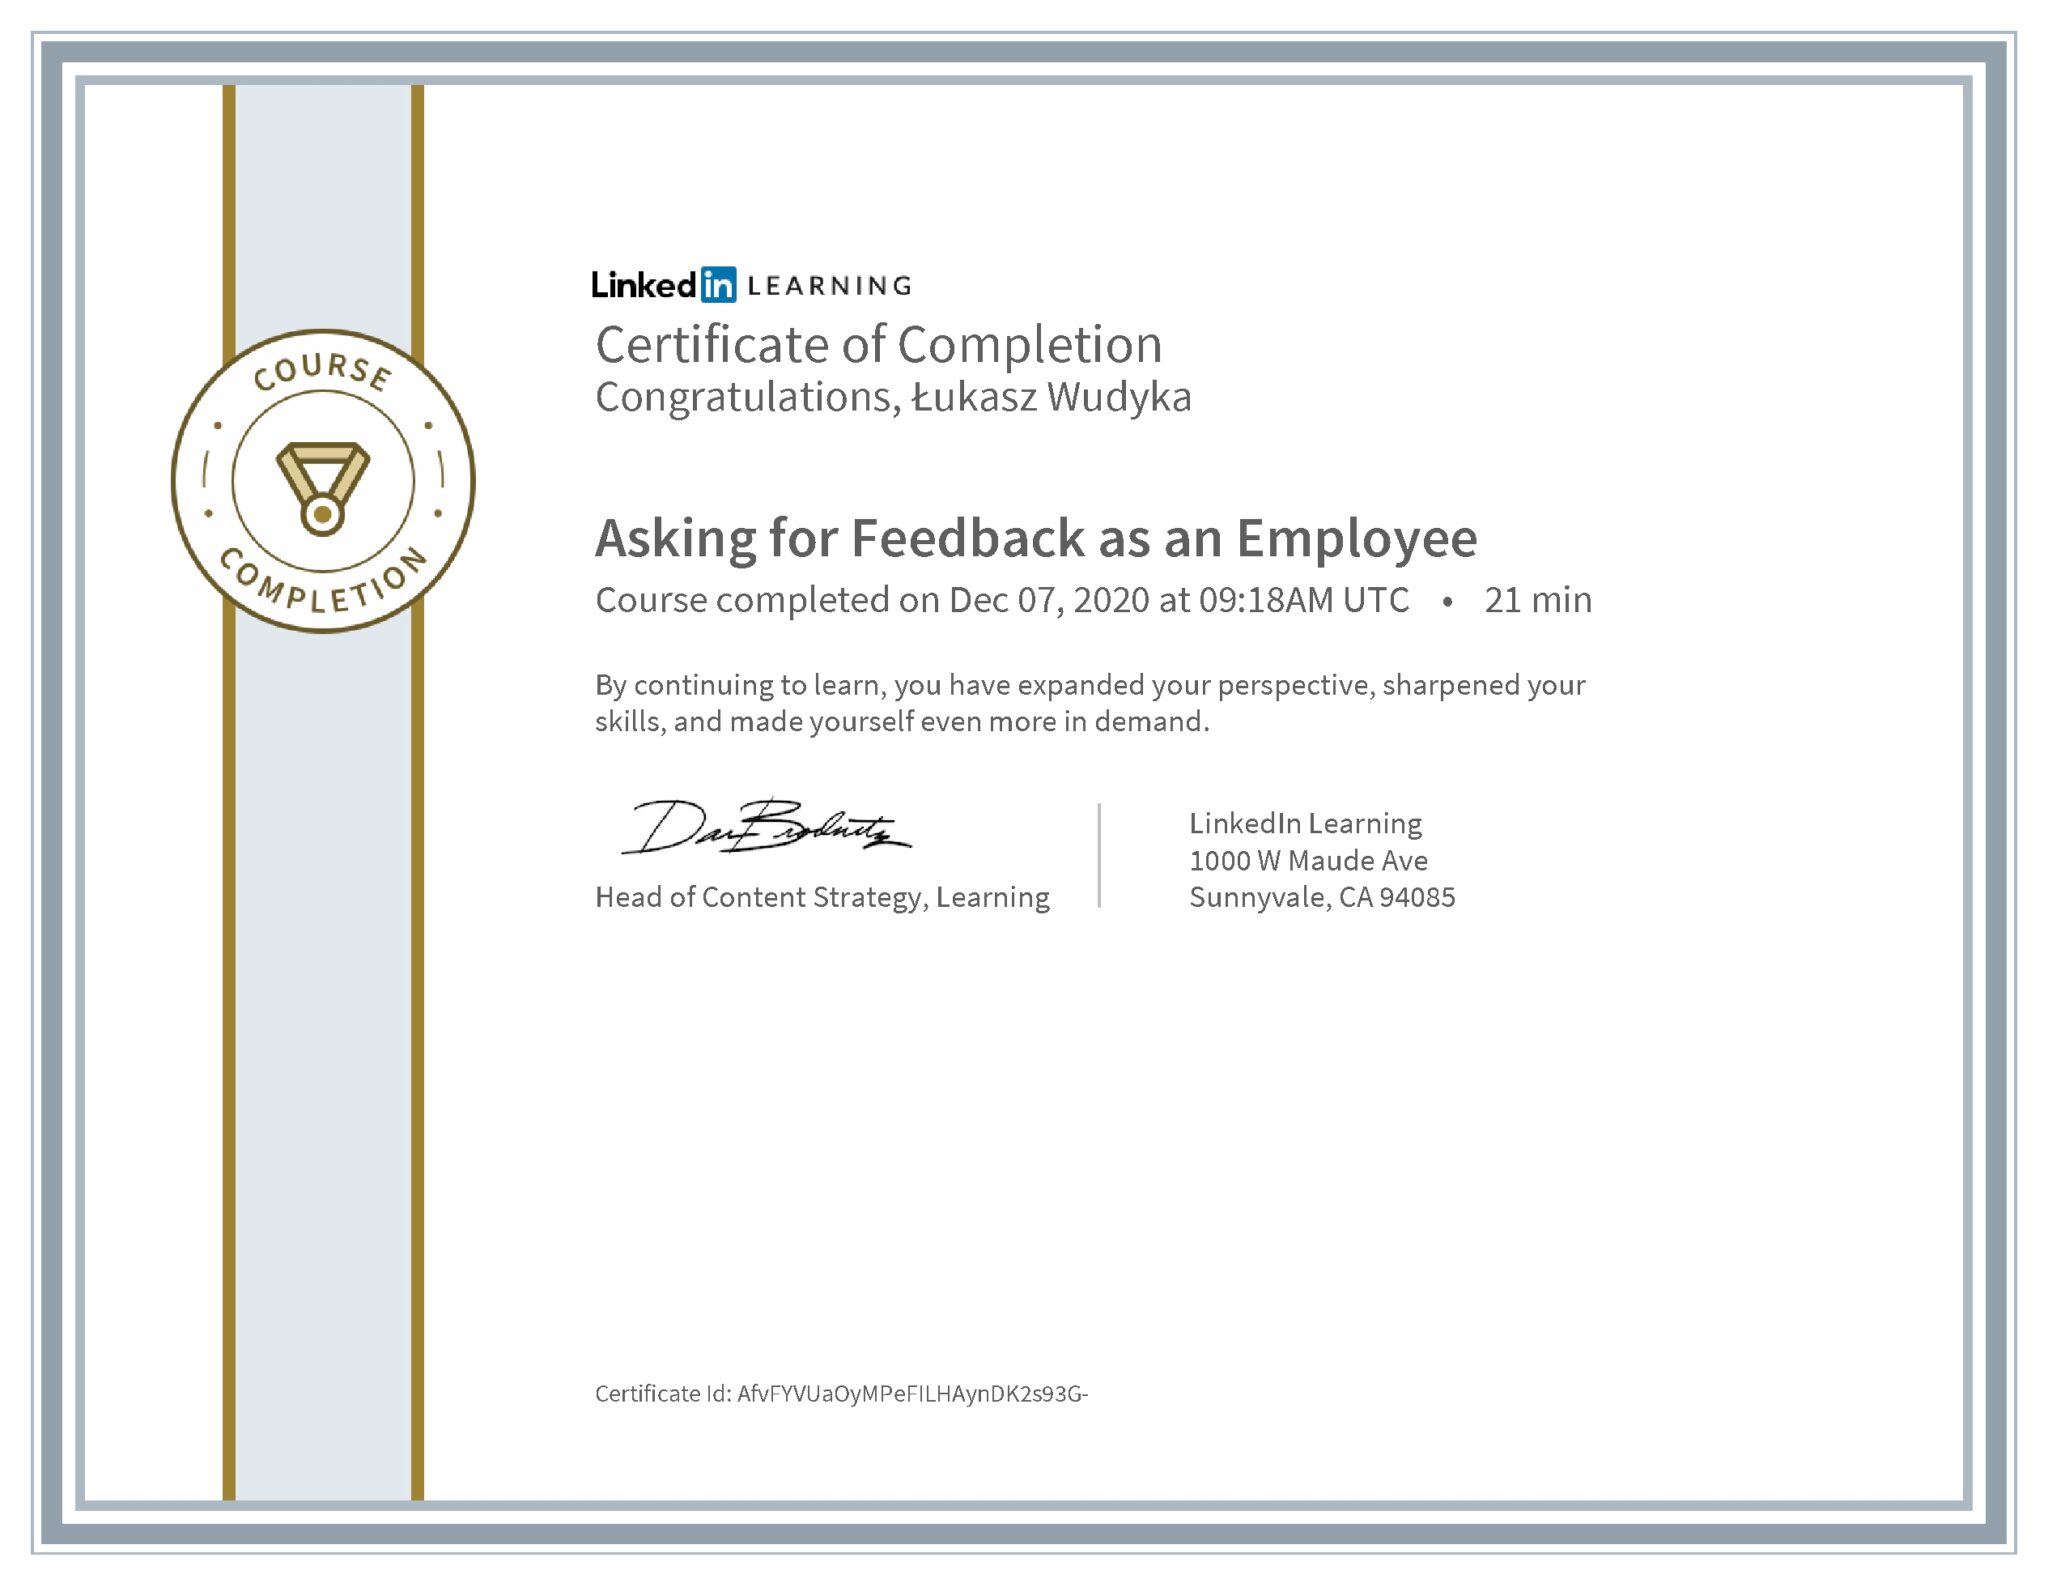 Łukasz Wudyka certyfikat LinkedIn Asking for Feedback as an Employee